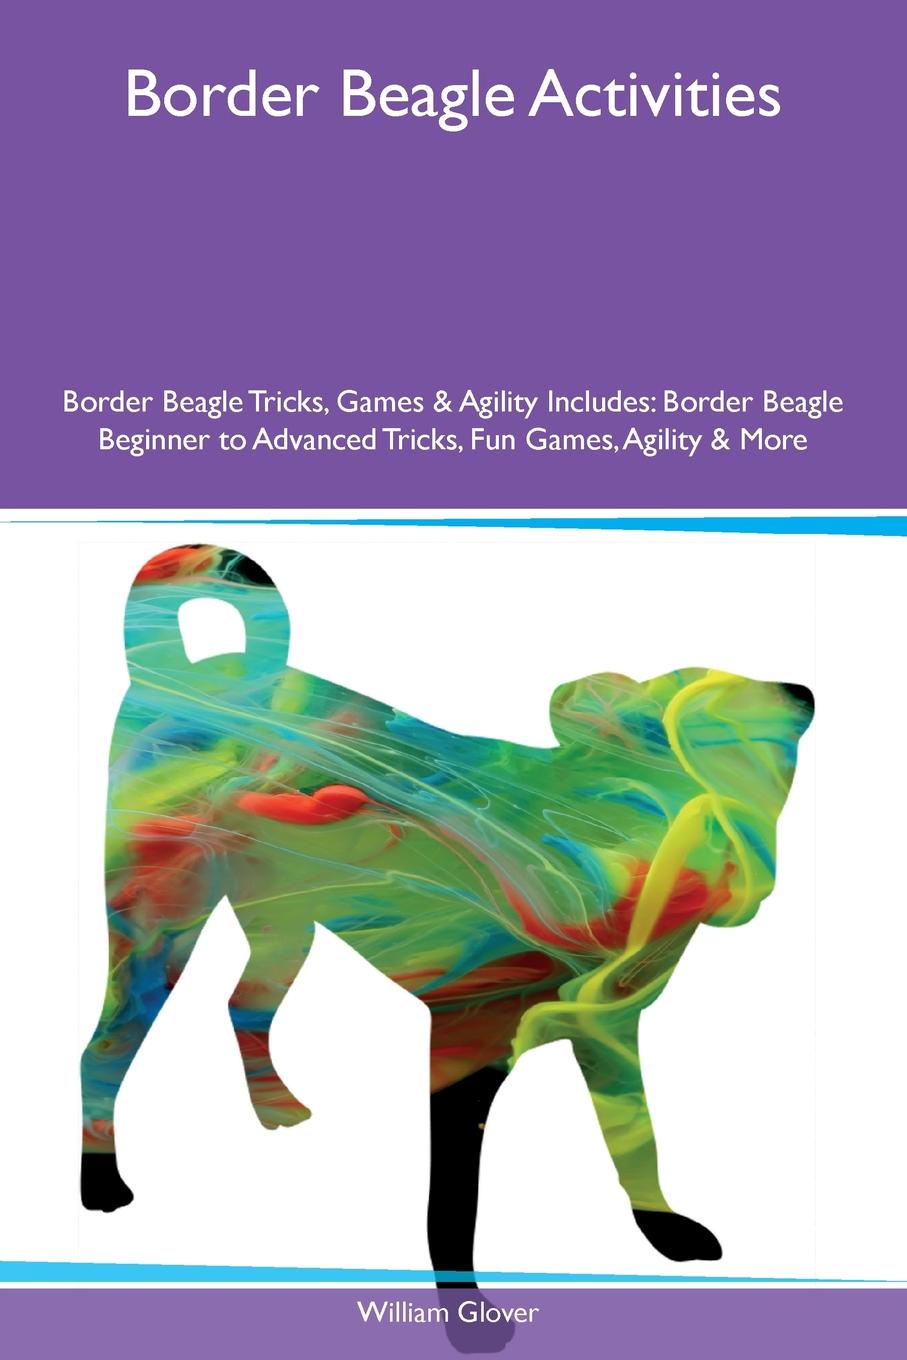 Border Beagle Activities Border Beagle Tricks, Games & Agility Includes. Border Beagle Beginner to Advanced Tricks, Fun Games, Agility & More